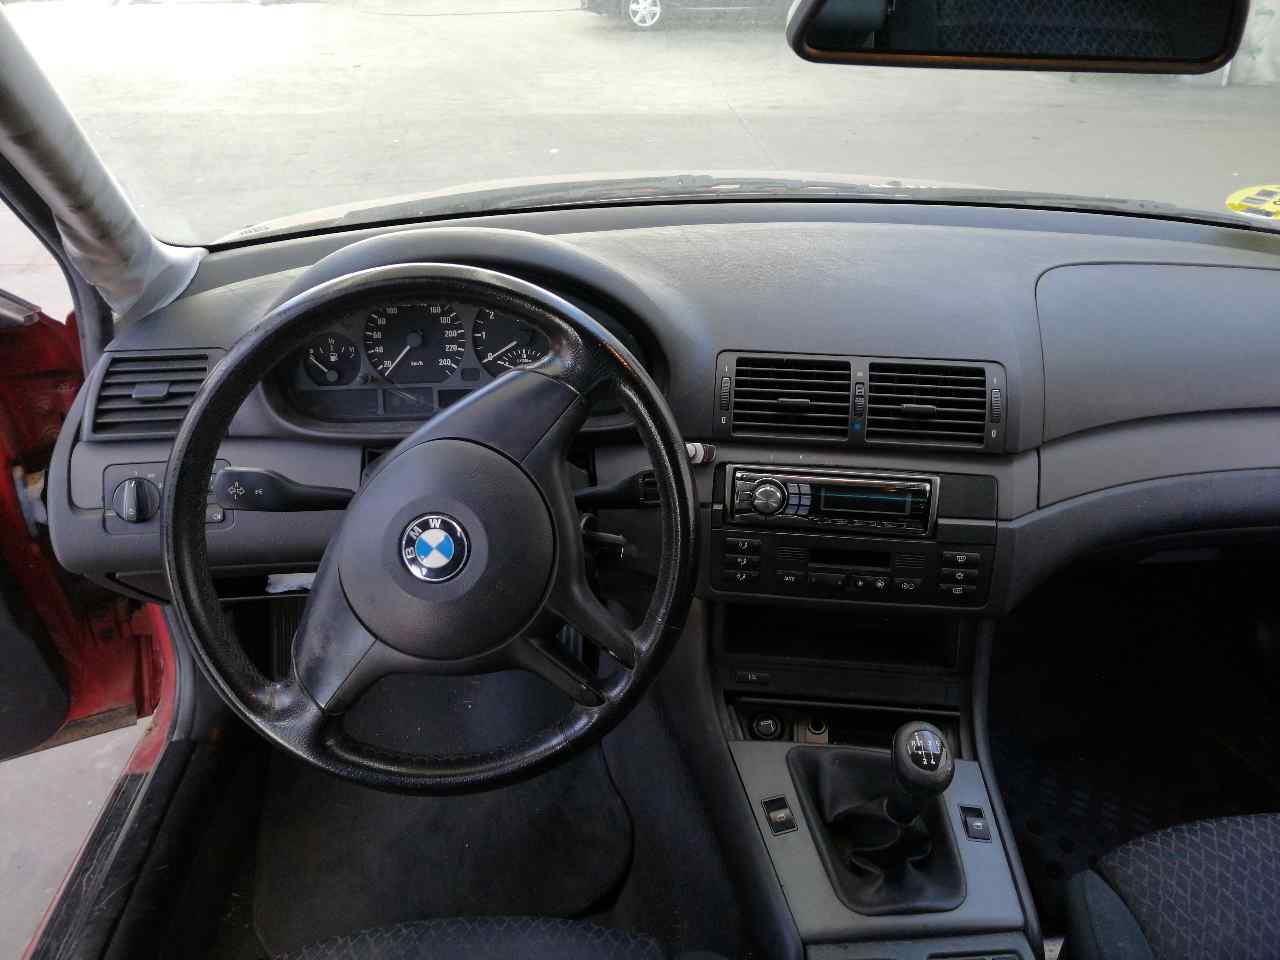 BMW 3 Series E46 (1997-2006) Smagratis 21217512693 19898700